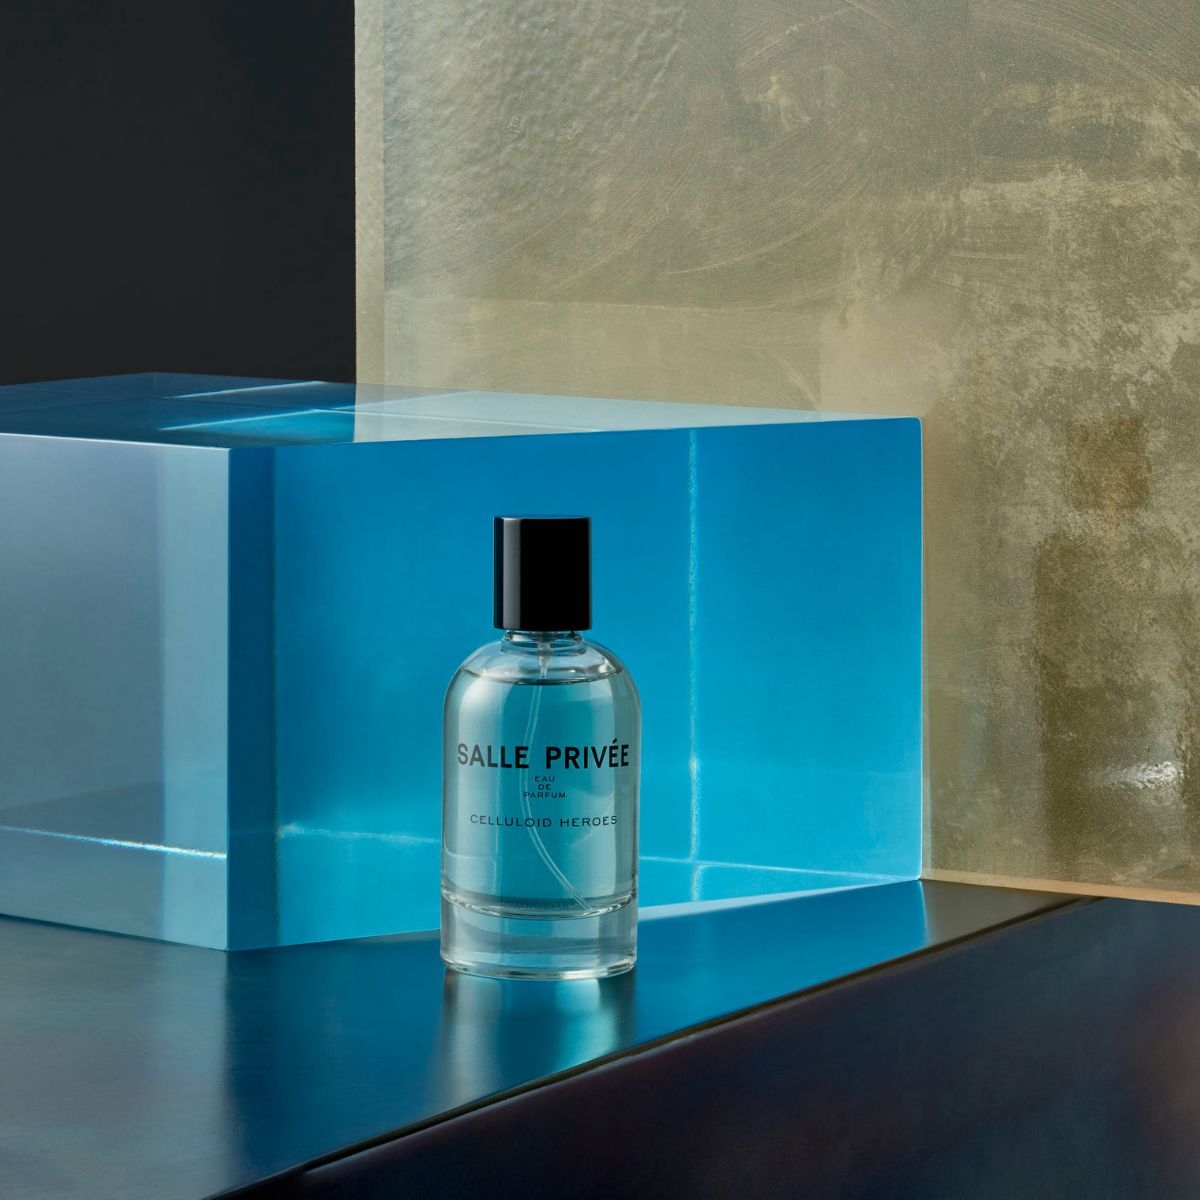 Image of Celluloid Heroes eau de parfum 100 ml by the perfume brand Salle Privee